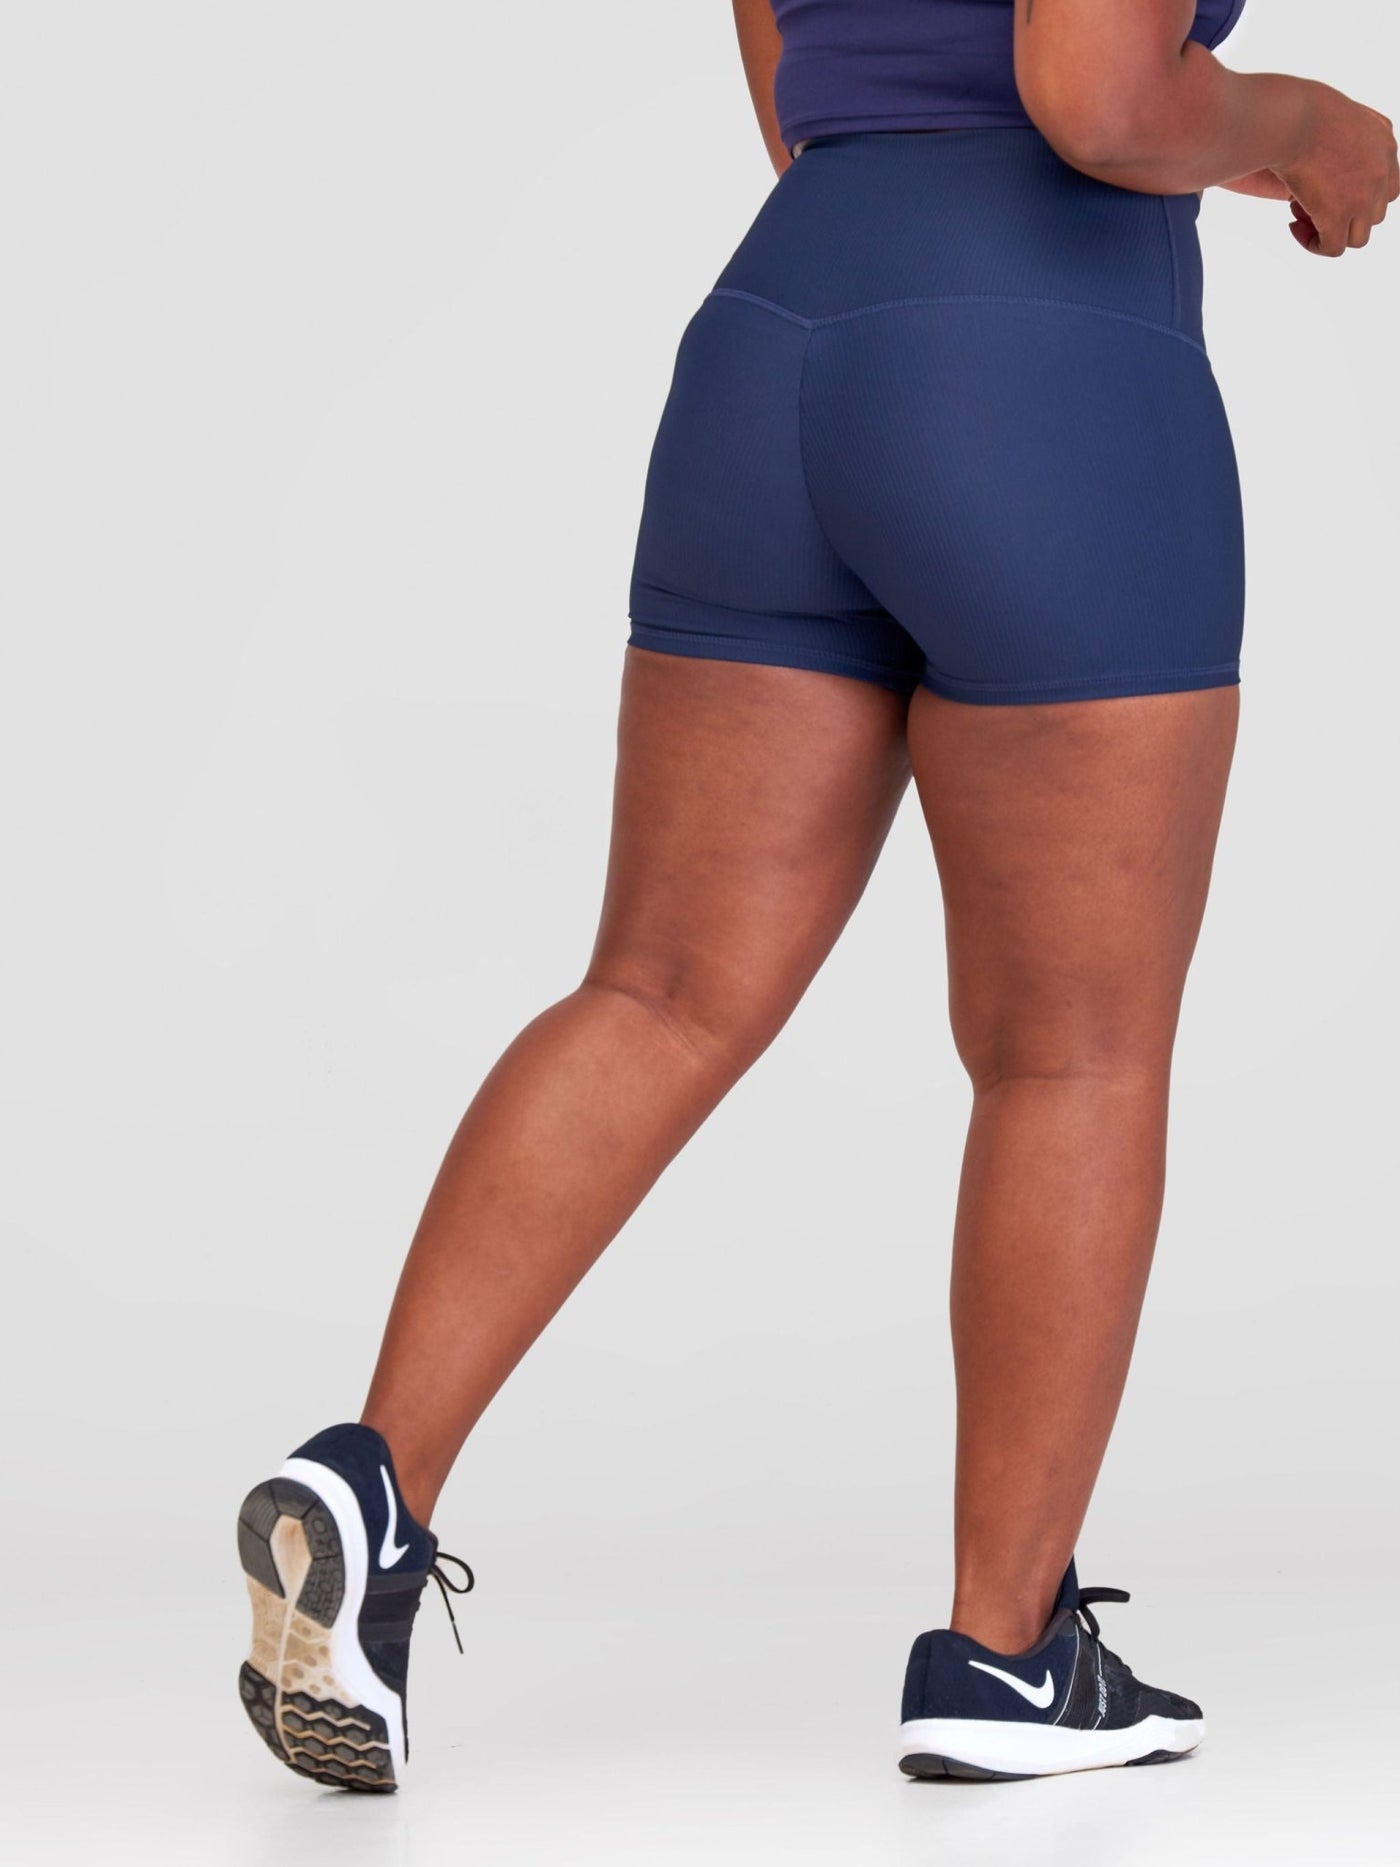 Ava Fitness Dazzle Workout Shorts - Dark Blue - Shopzetu